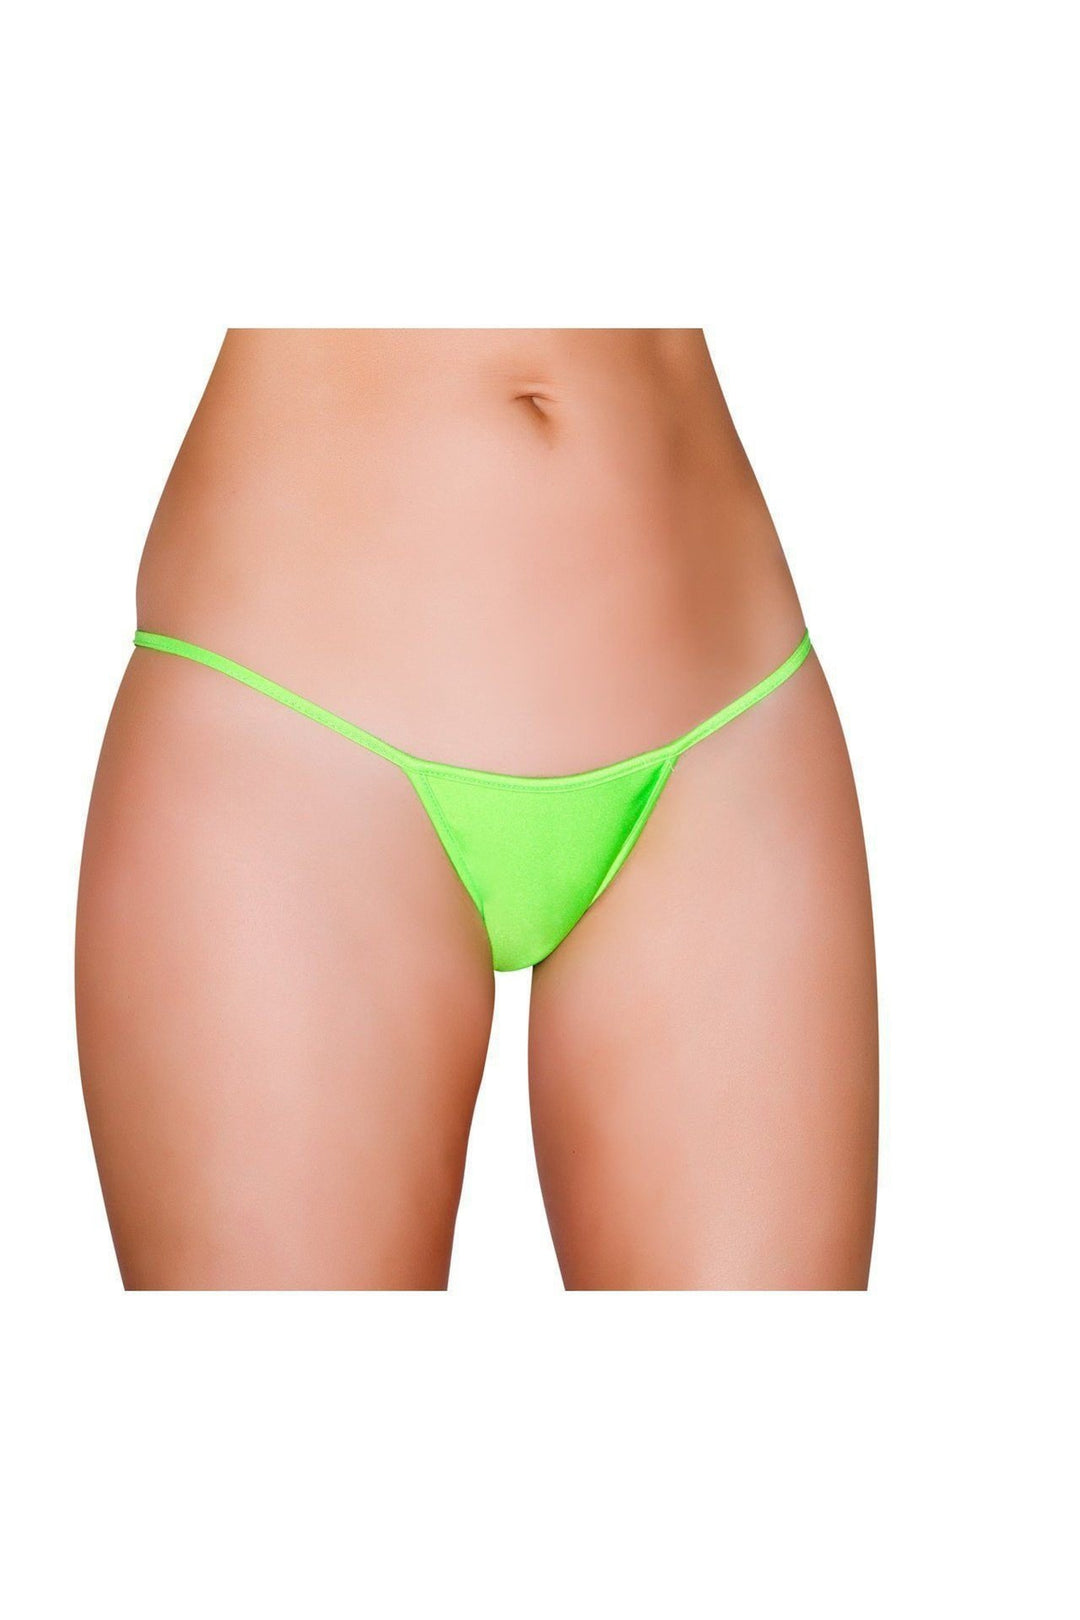 Green-Dancewear Separates-Sexy Bikini Bottom-Roma Dancewear-SEXYSHOES.COM